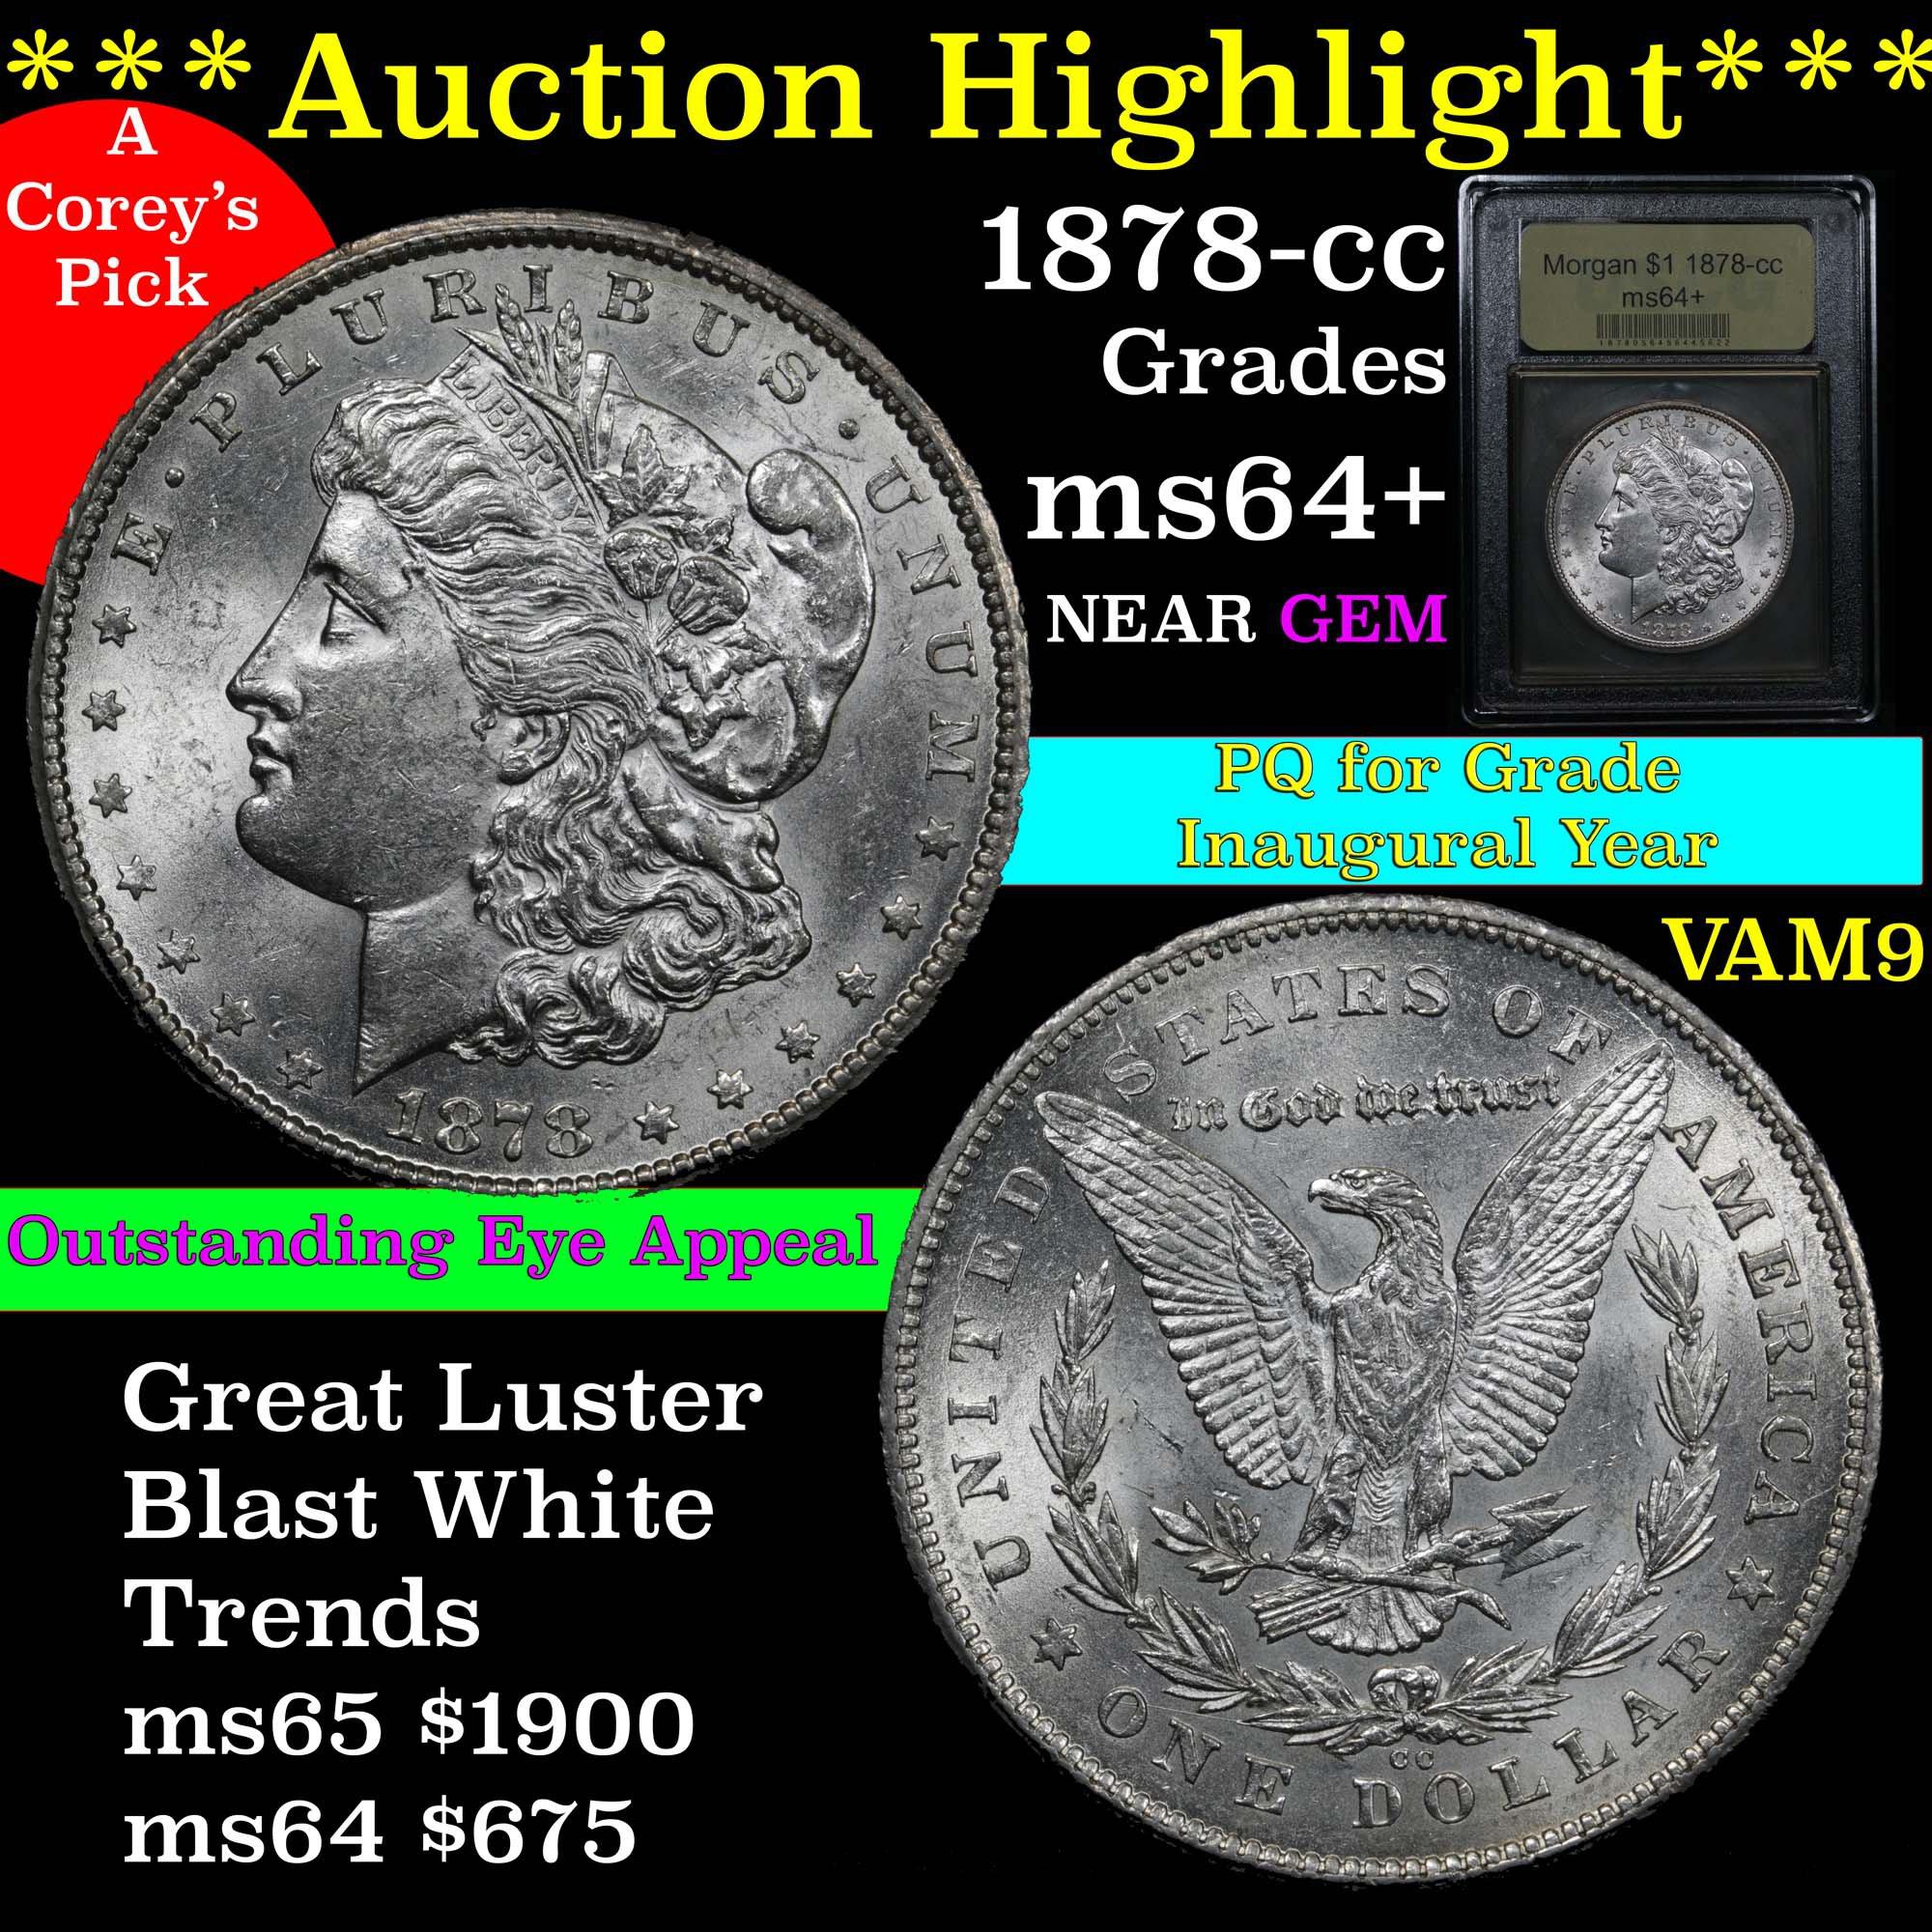 ***Auction Highlight*** Scarce 1878-cc Morgan Dollar $1 Vam 9 Graded Choice+ Unc by USCG PQ (fc)